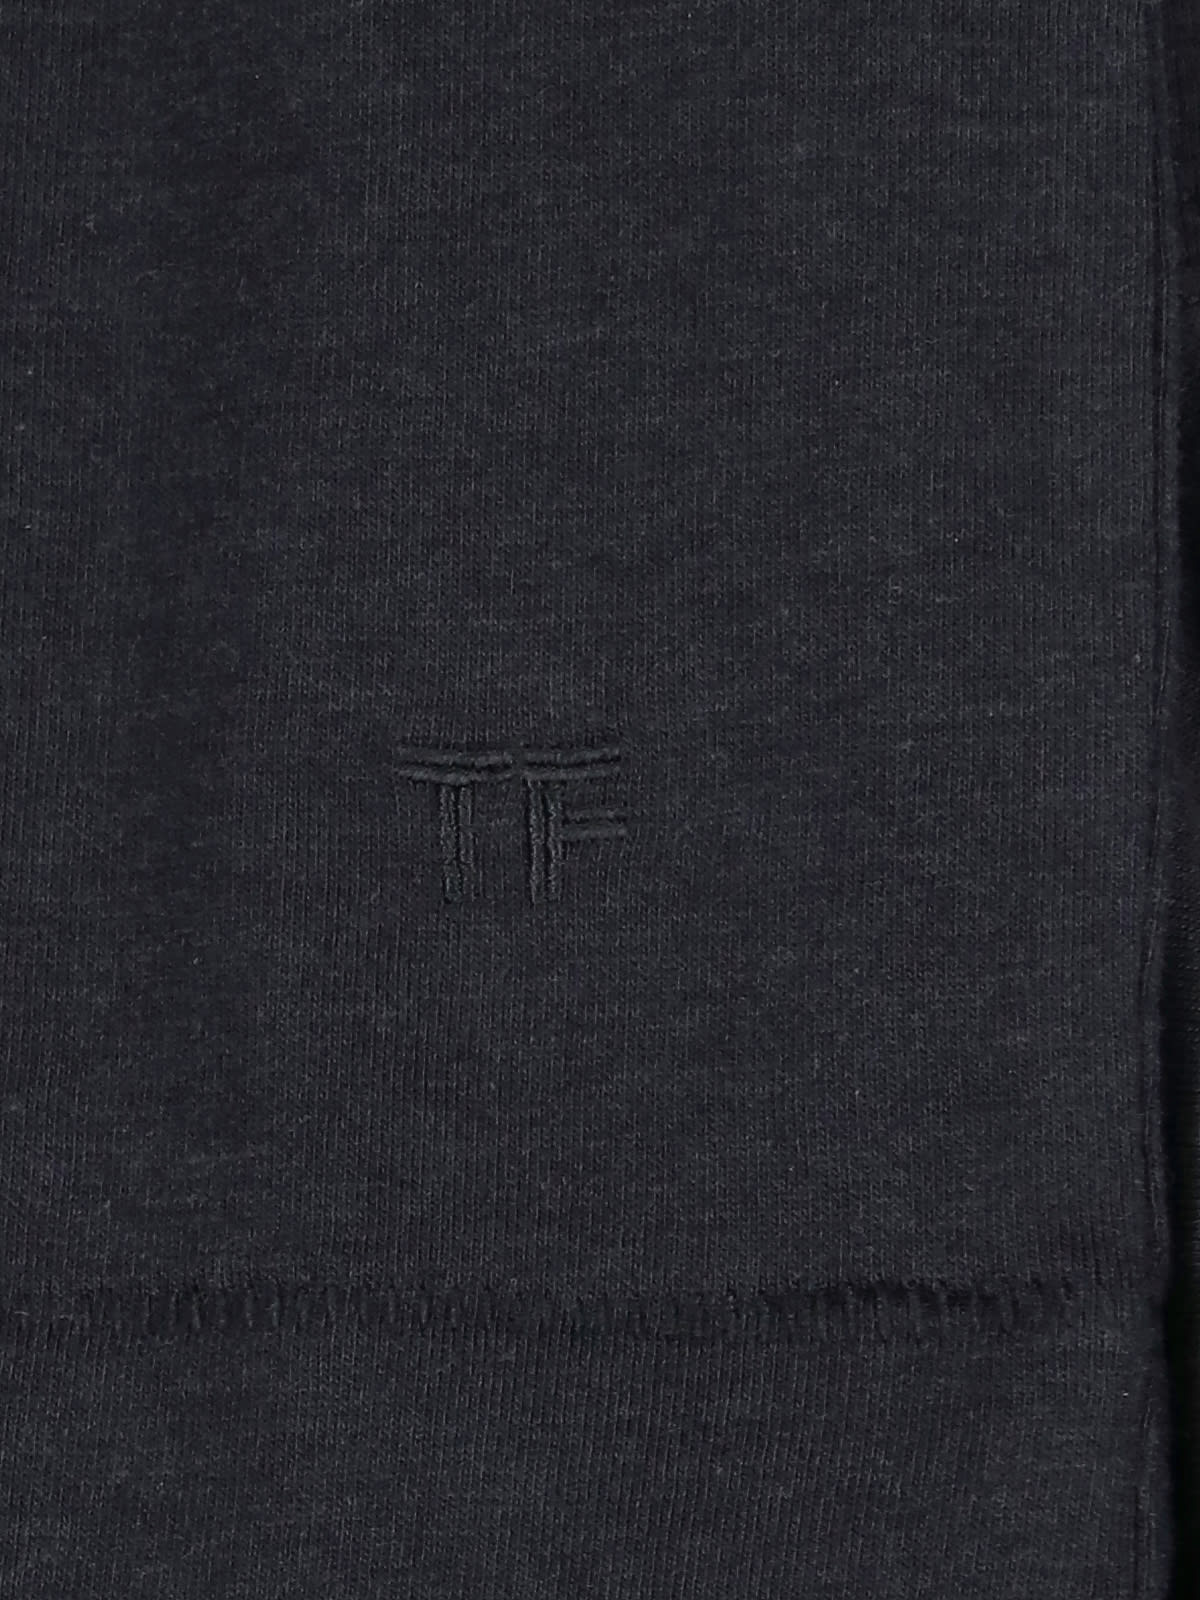 Shop Tom Ford Basic T-shirt In Black